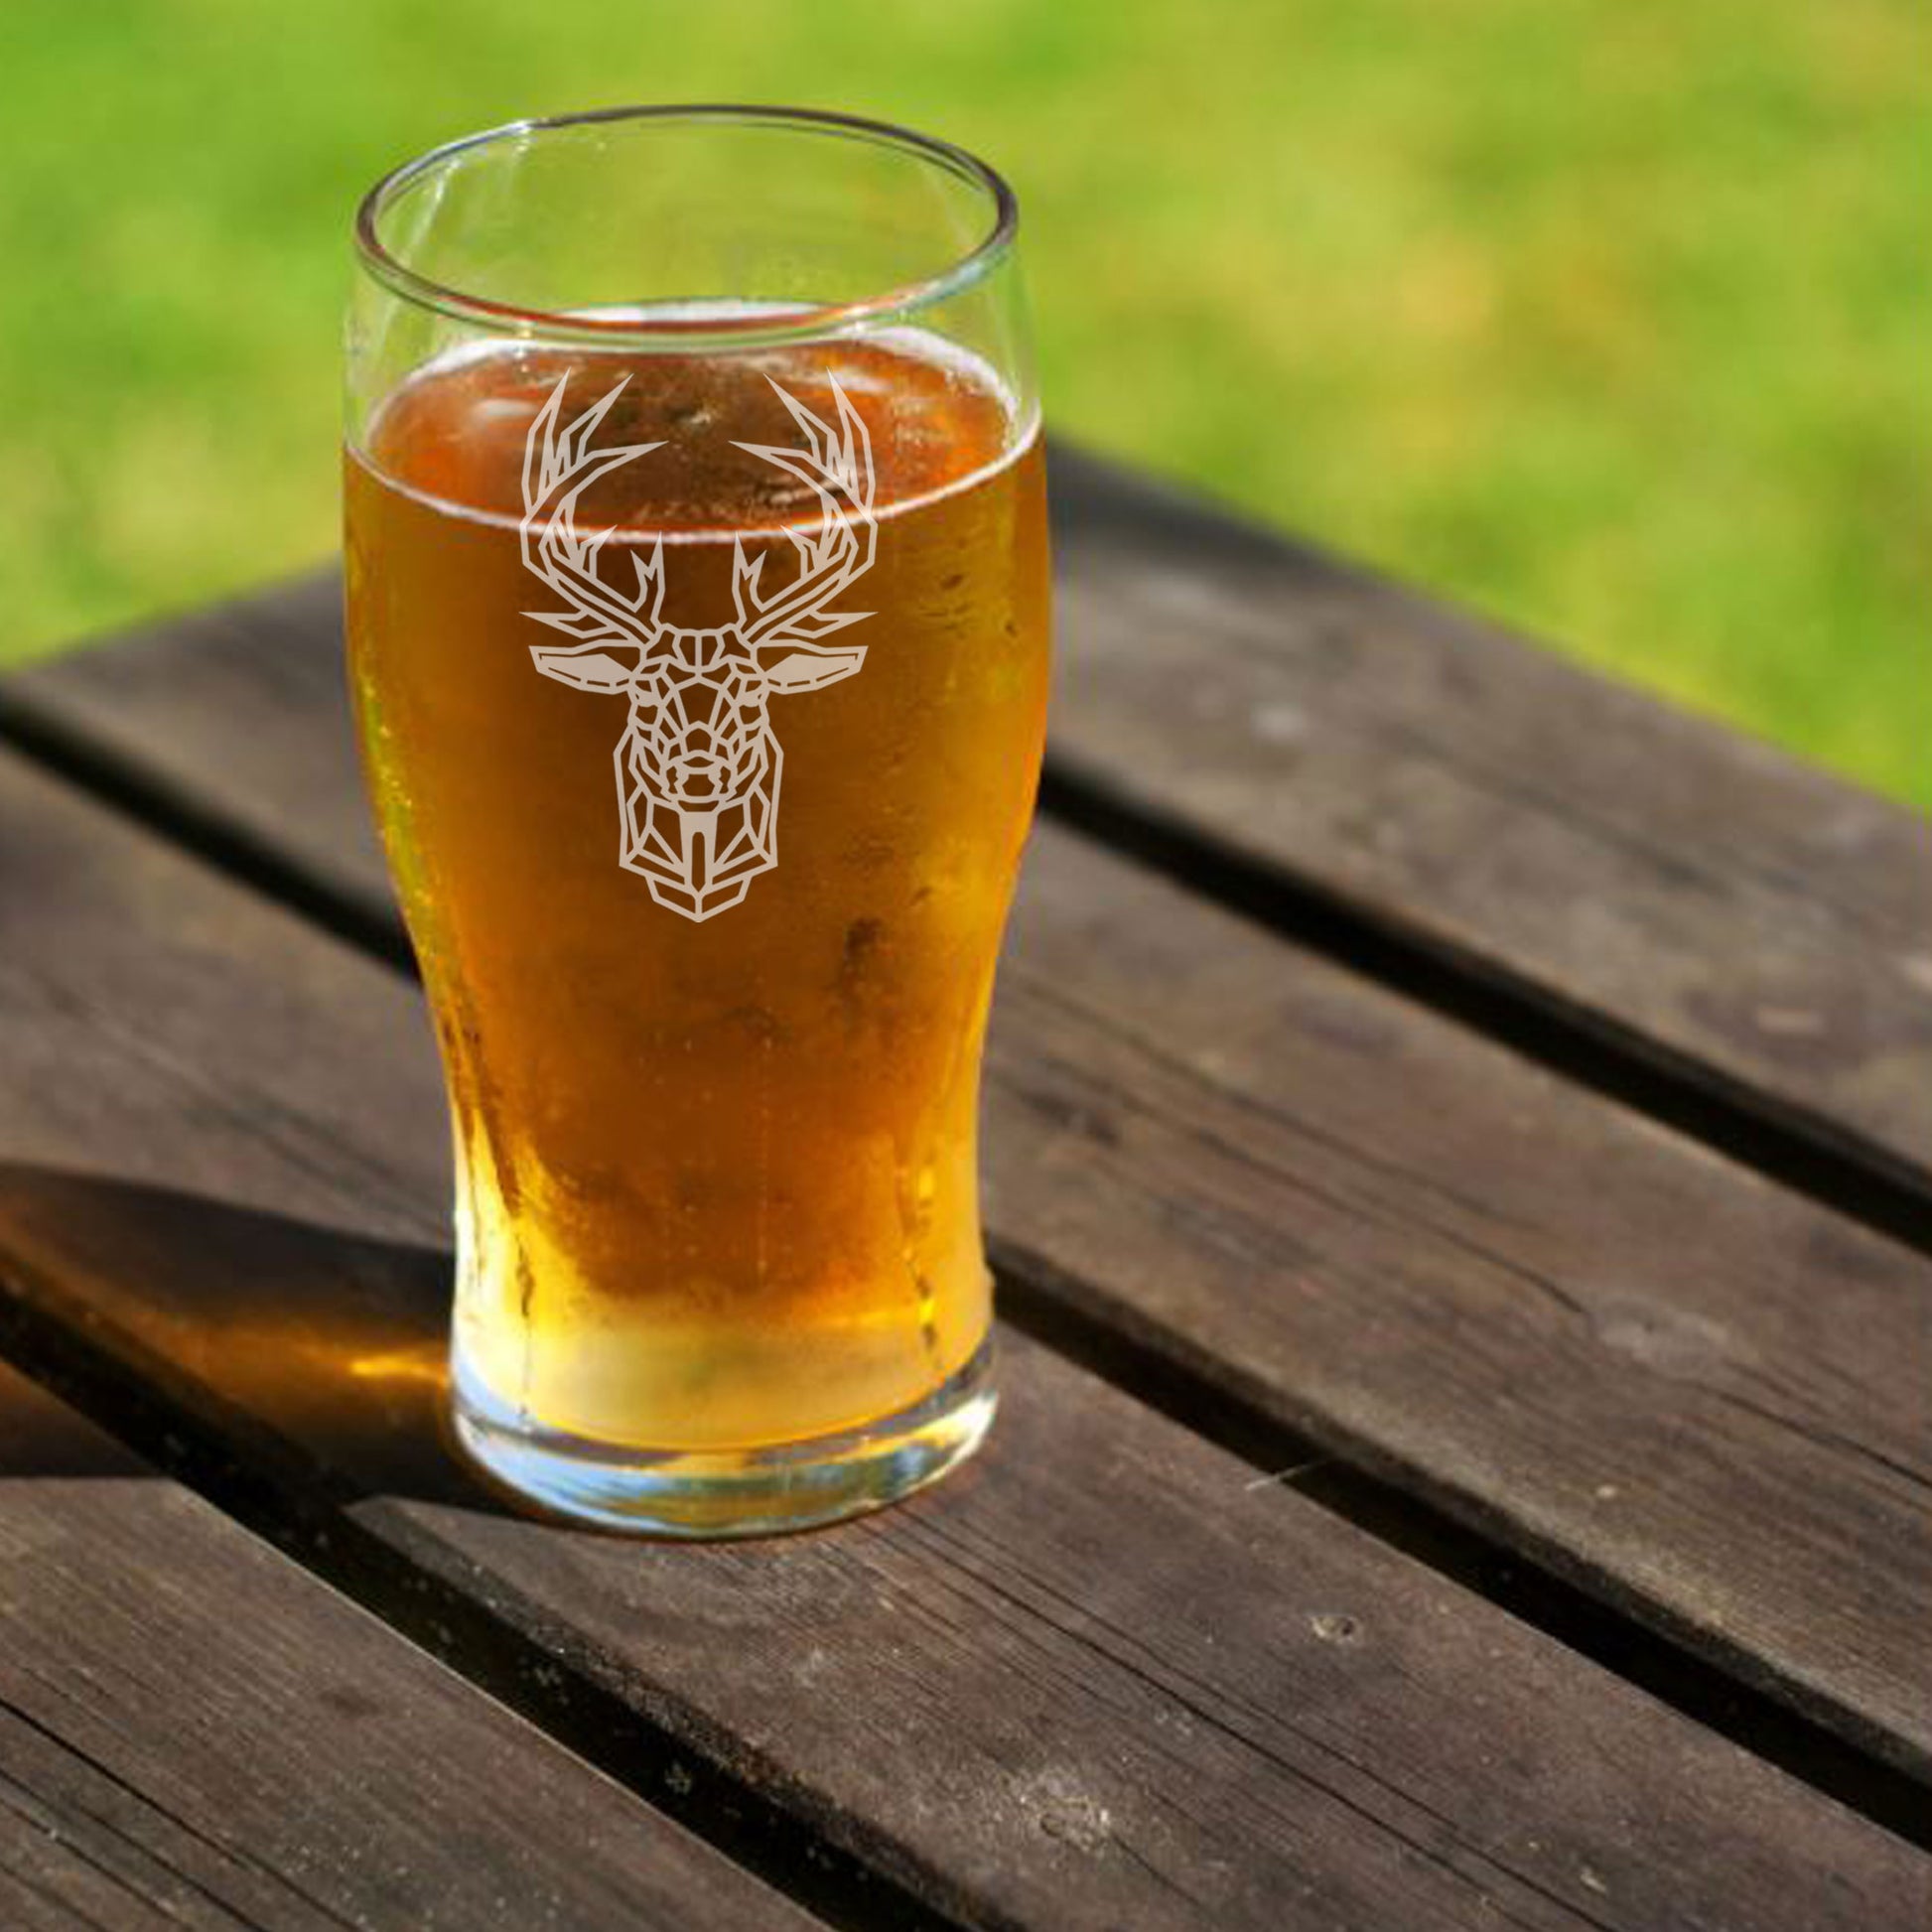 Stag Engraved Beer Pint Glass  - Always Looking Good -   